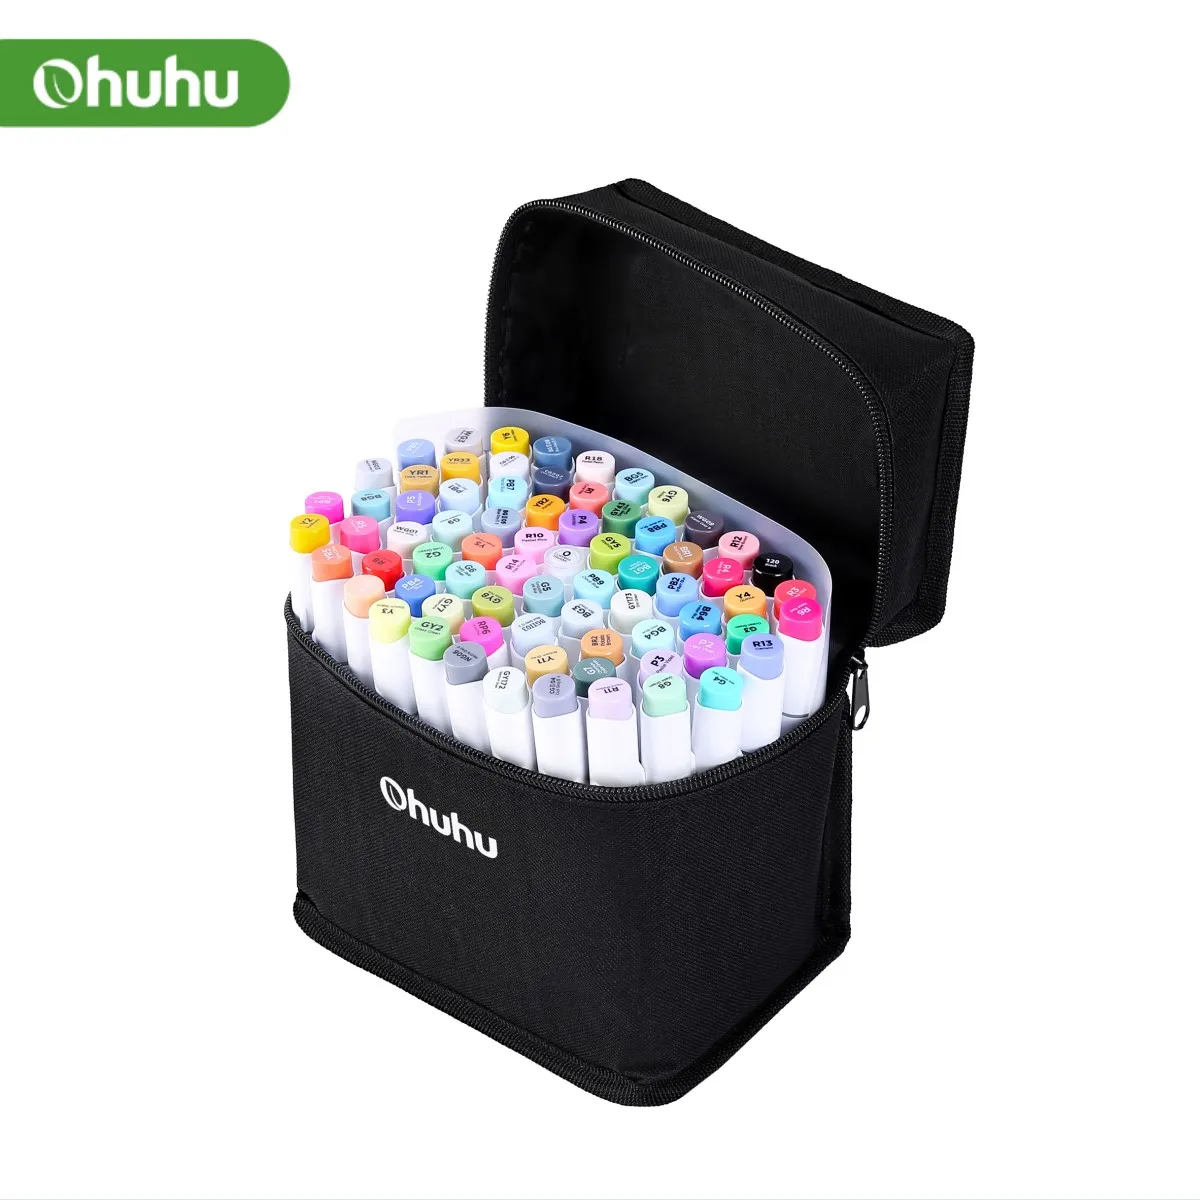 ohuhu electric eraser kit with 20